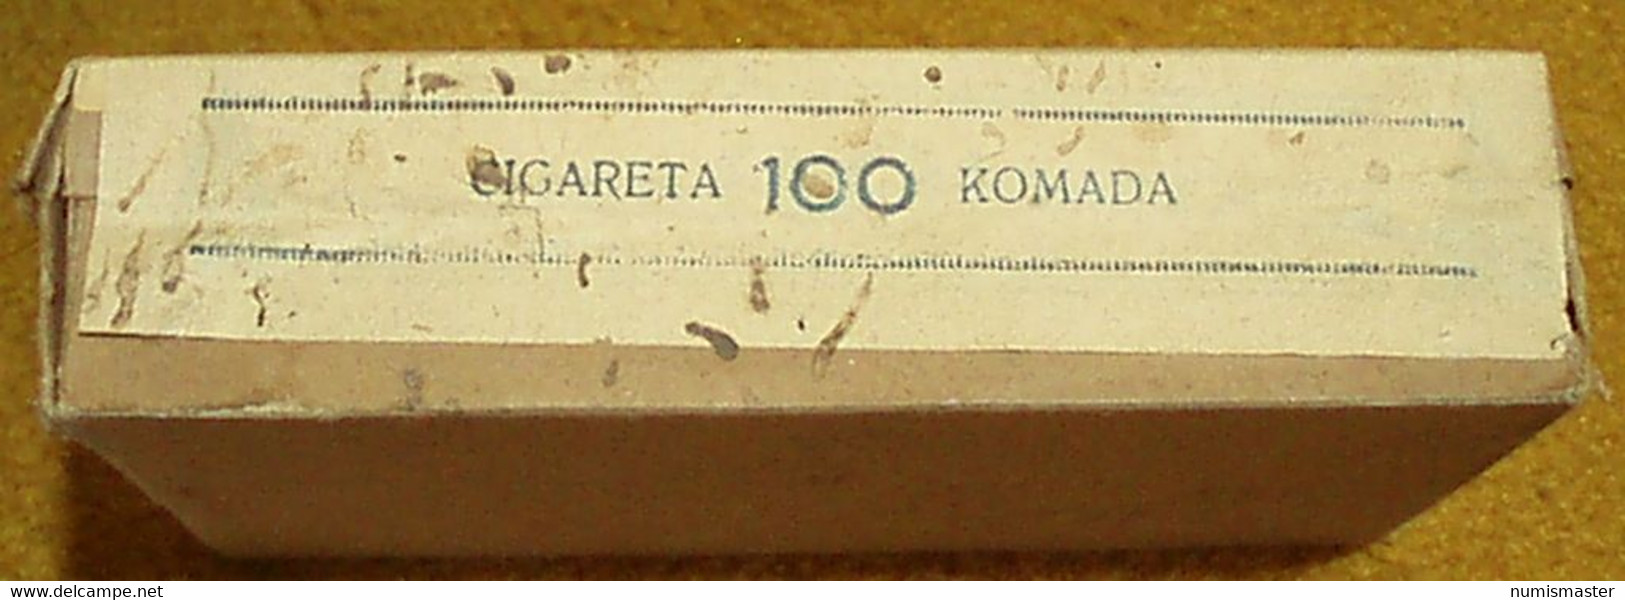 DF YUGOSLAVIA , HERCEGOVINA CIGARETES 100 PIECES EMPTY BOX - Etuis à Cigarettes Vides